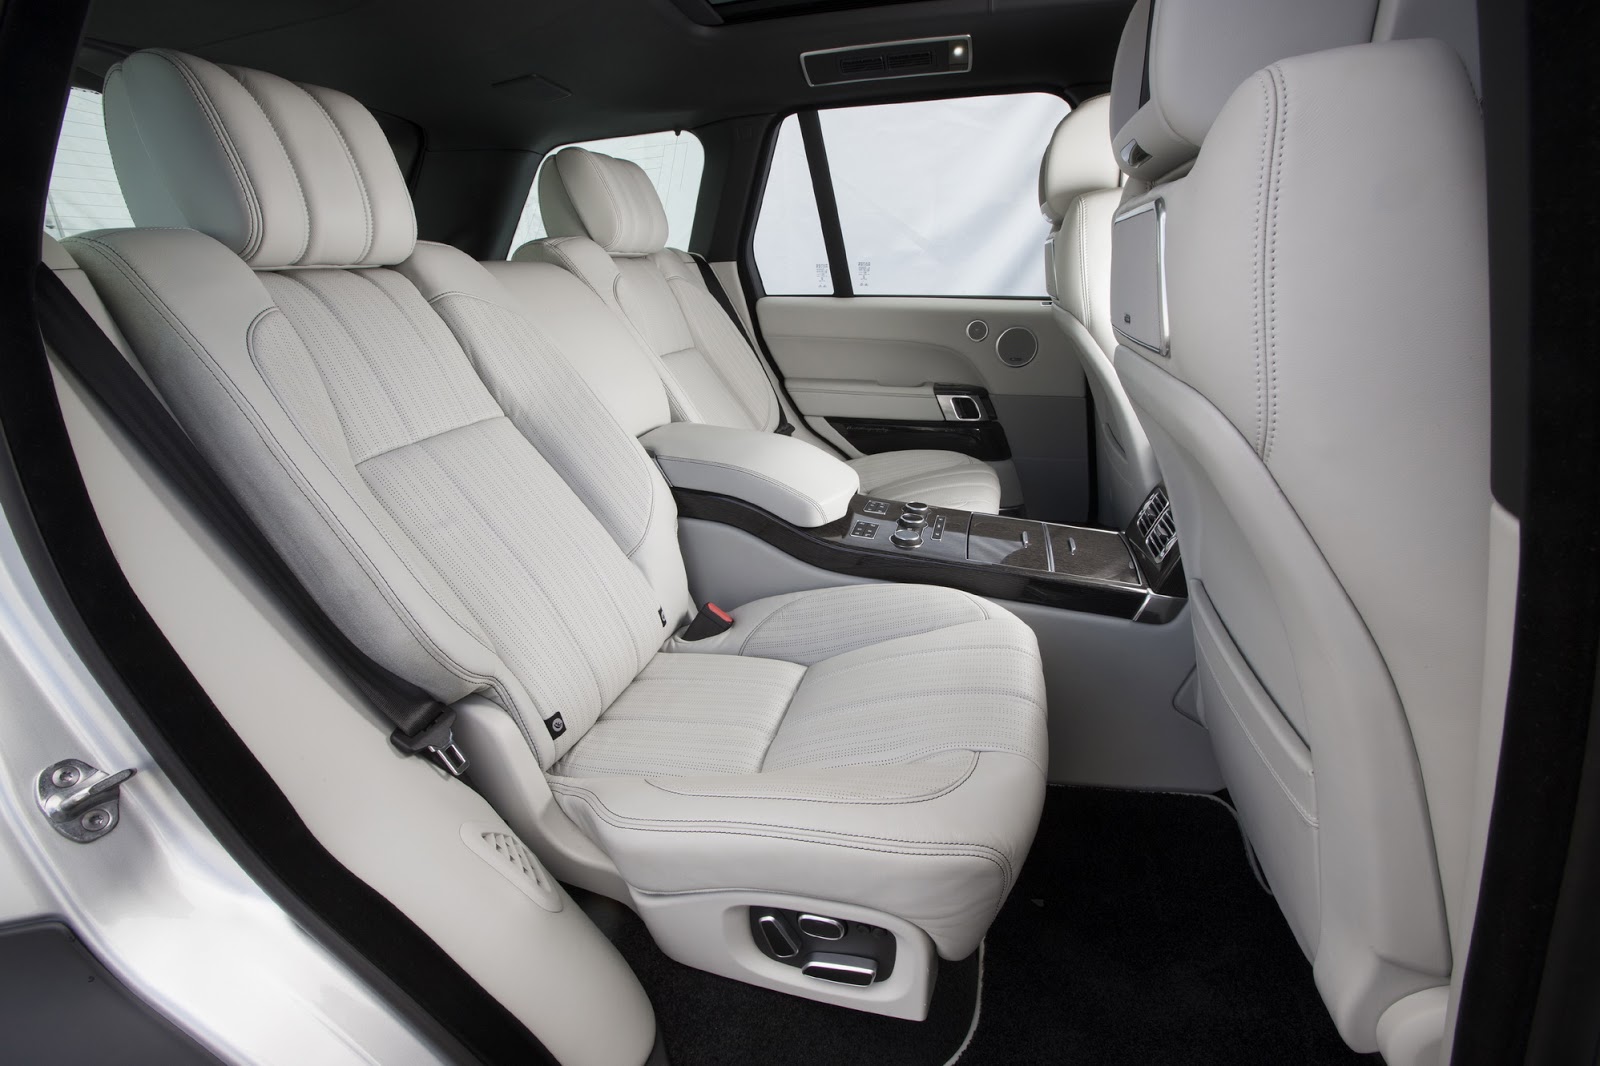 2013 Range Rover Interior